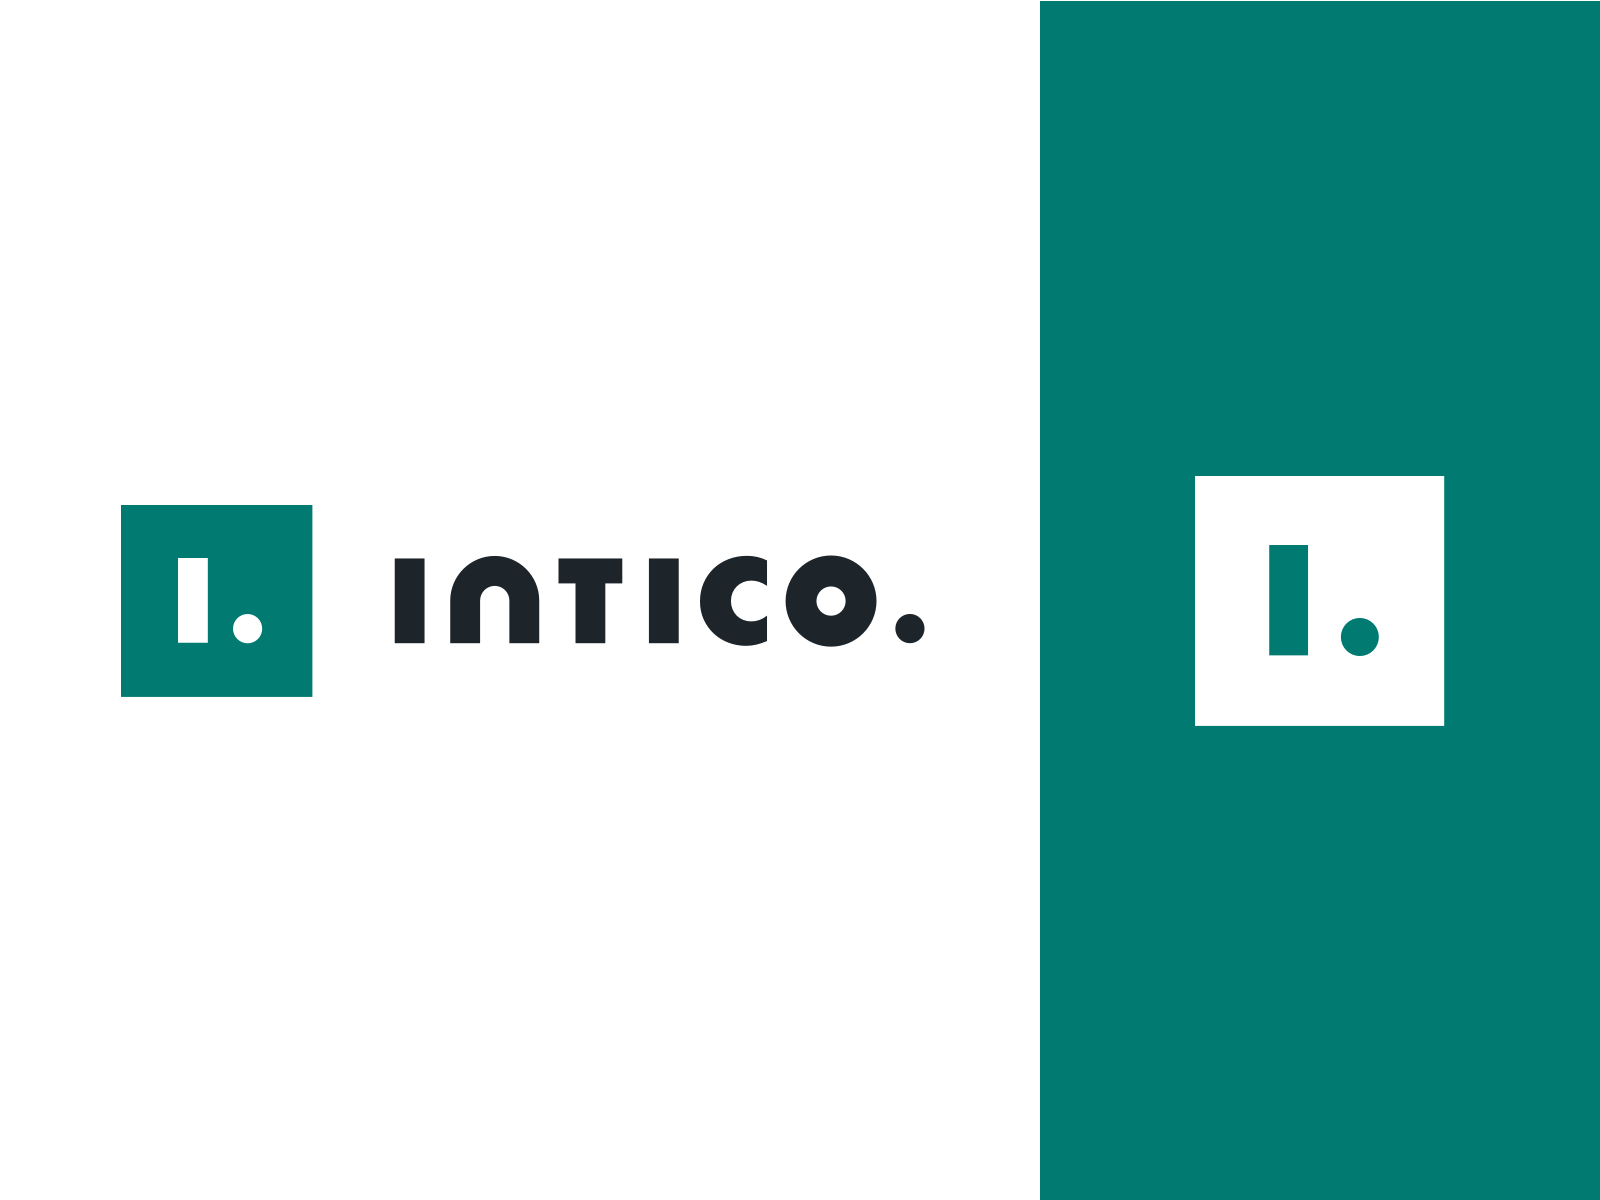 Logo - Intico engineer engineering font green icon logo logo design